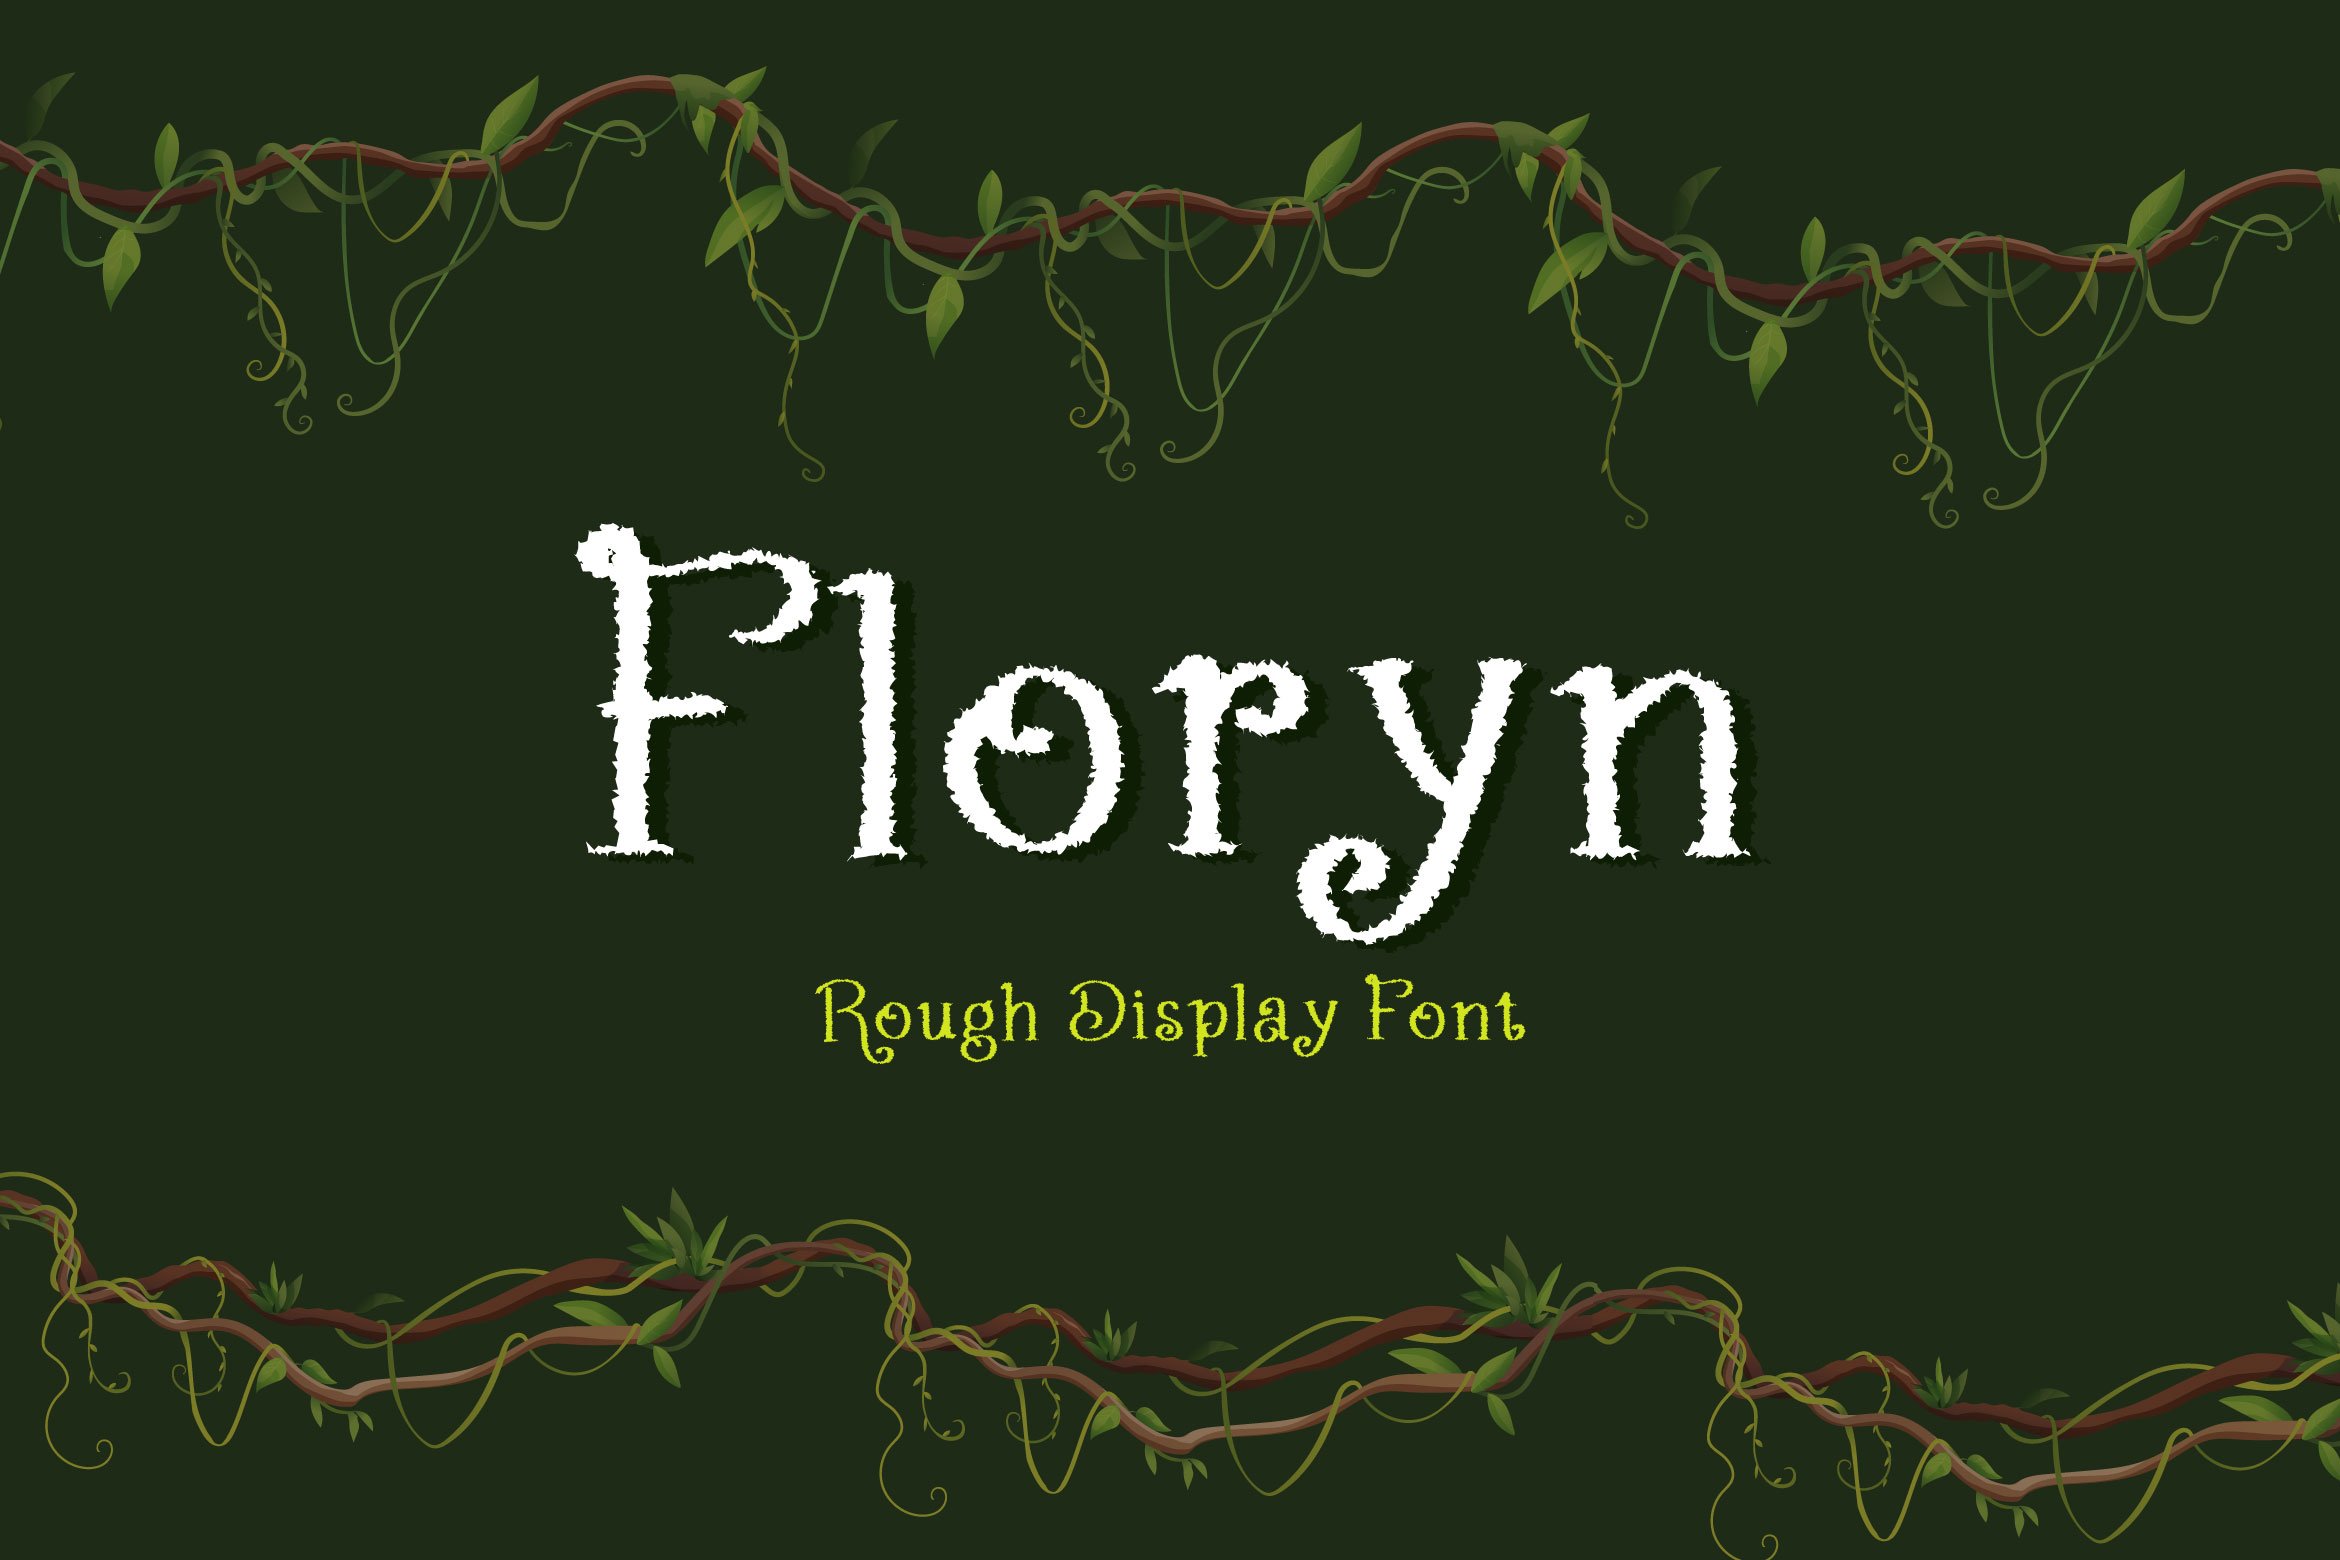 Floryn - Decorative Fantasy Font cover image.